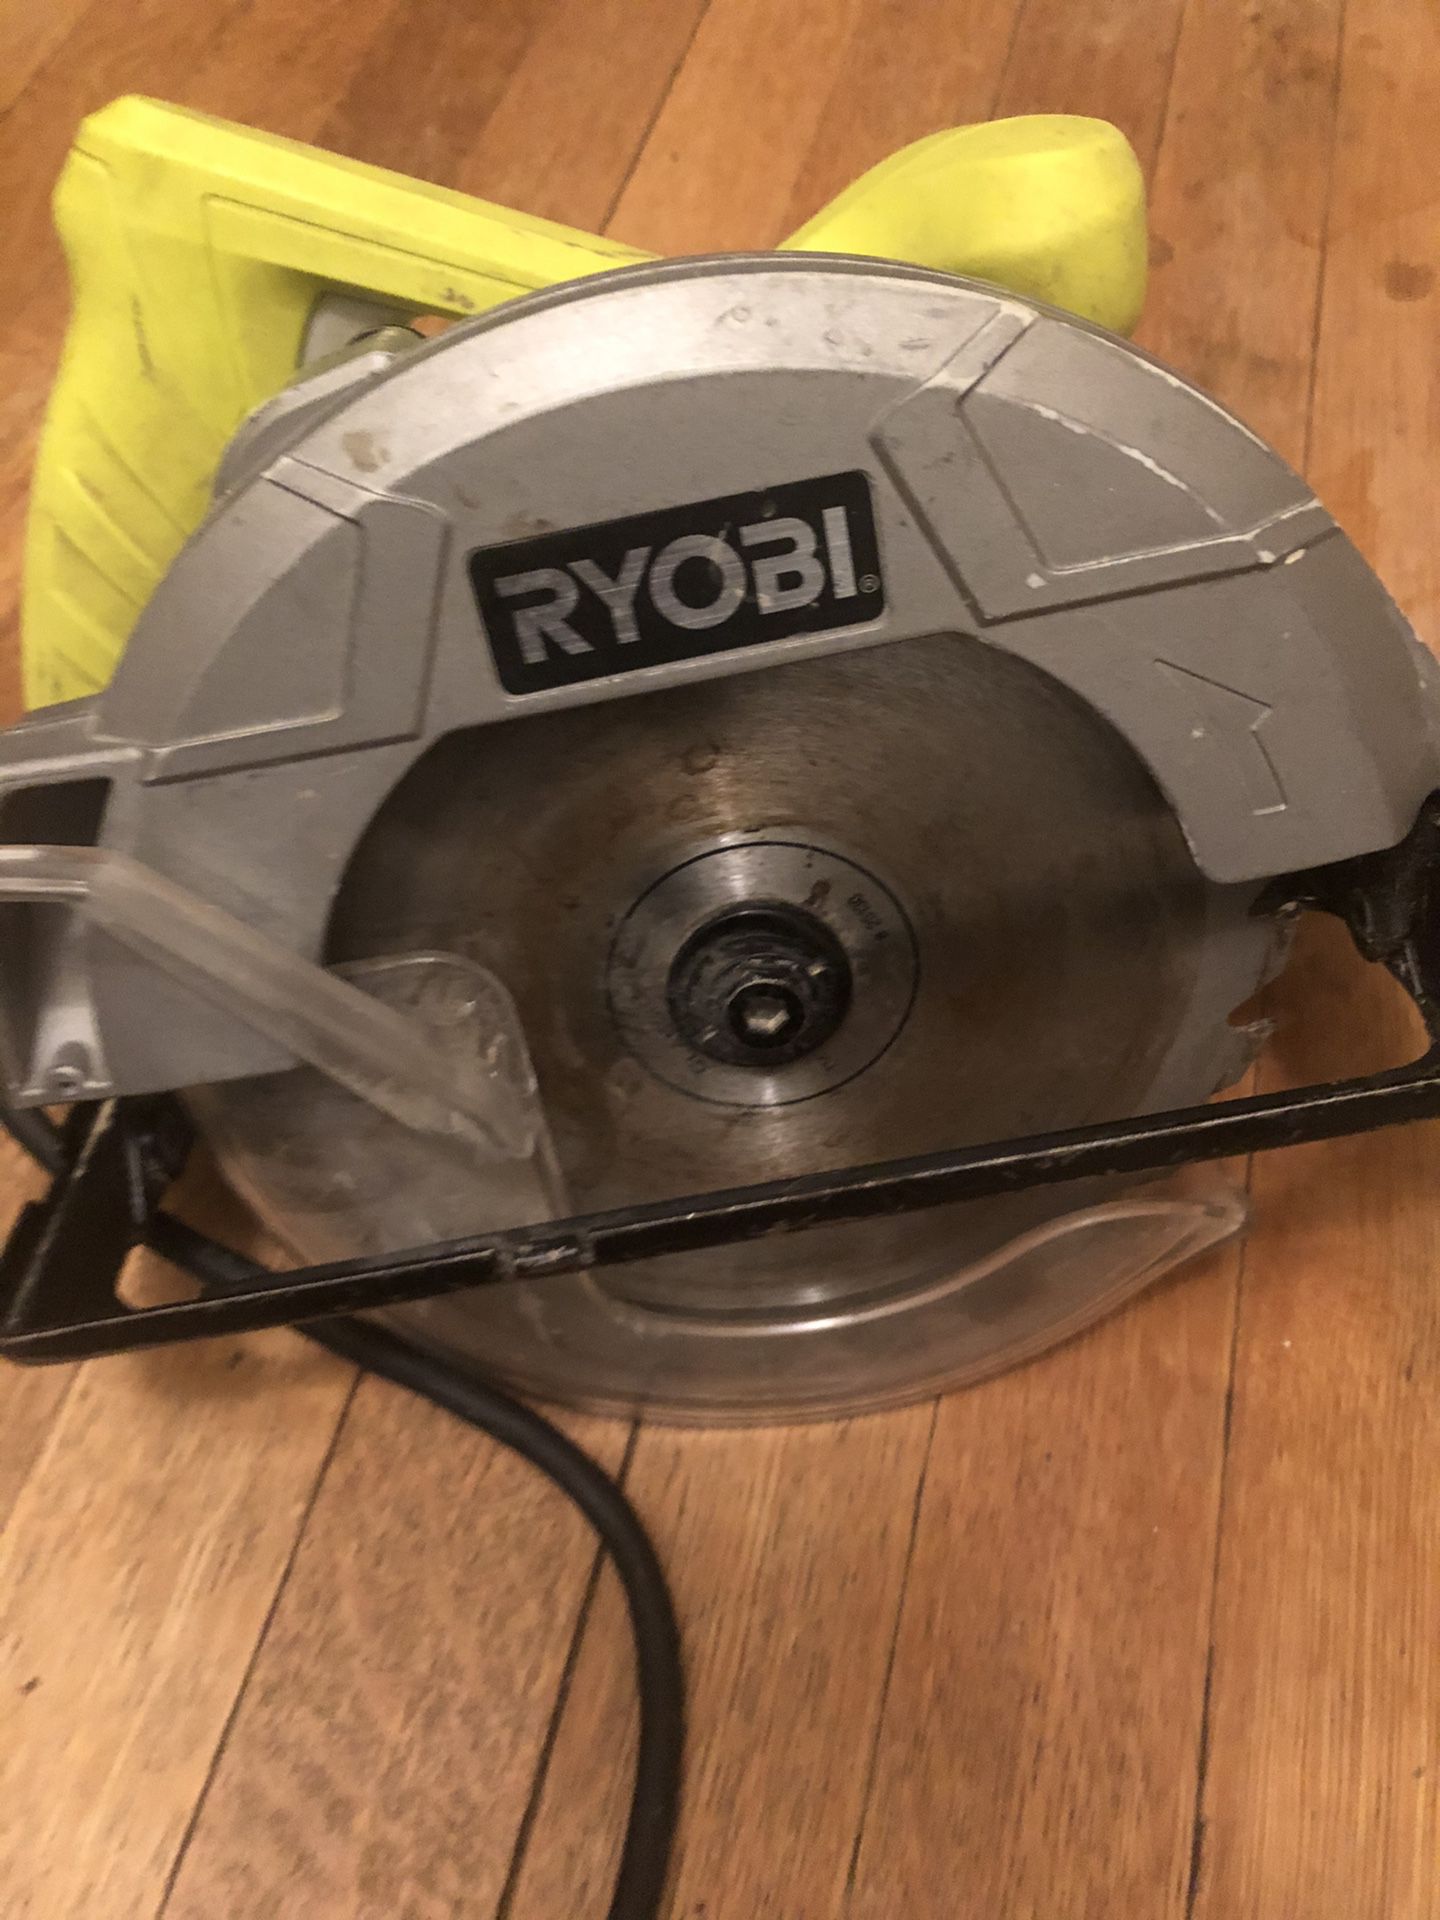 Ryobi 13 AMP Circular Saw